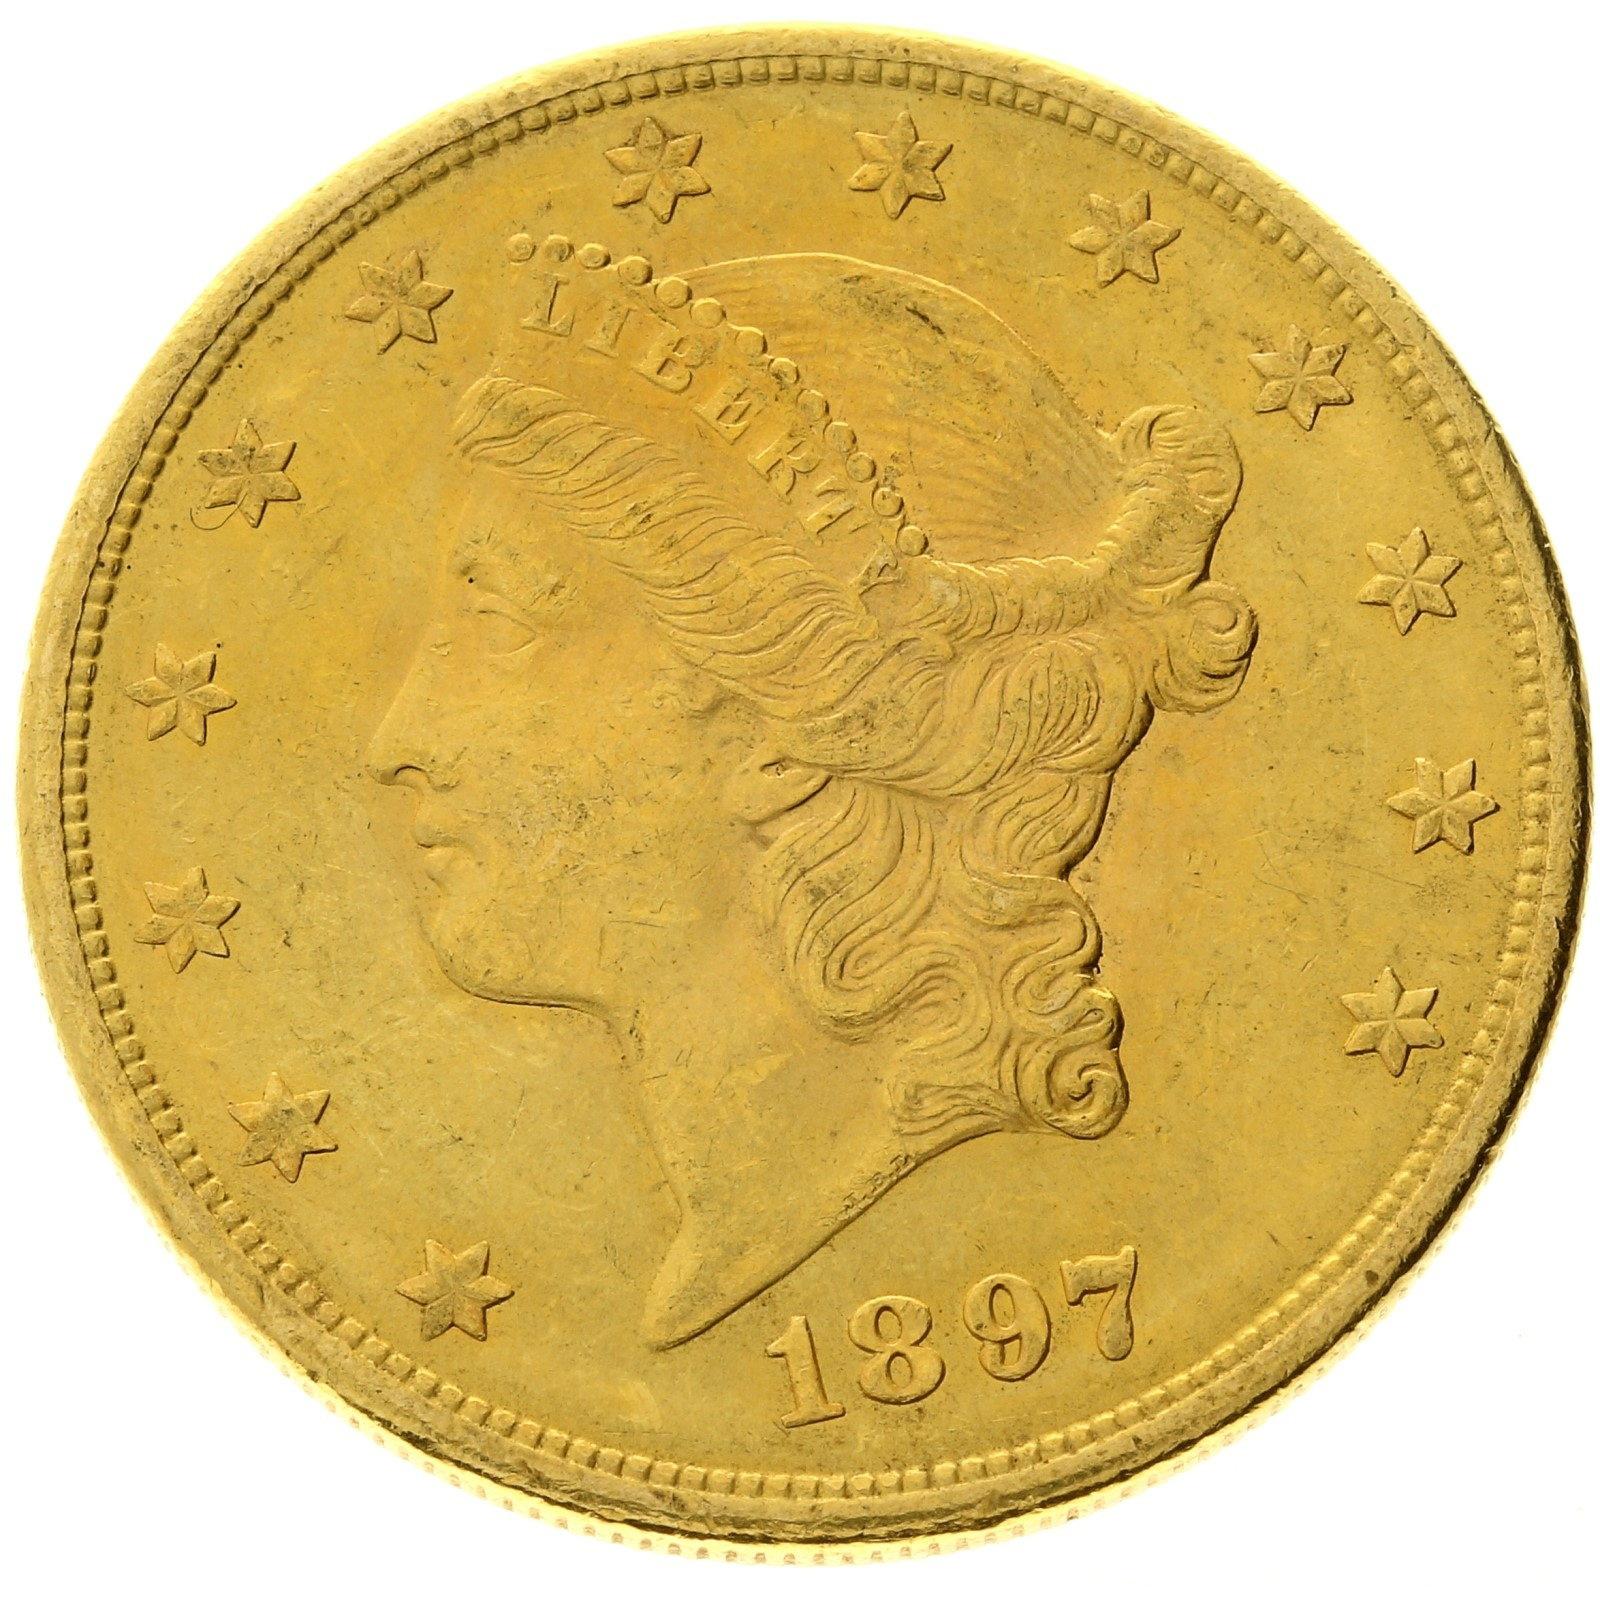 USA - 20 dollars - 1897 - S - Liberty Head